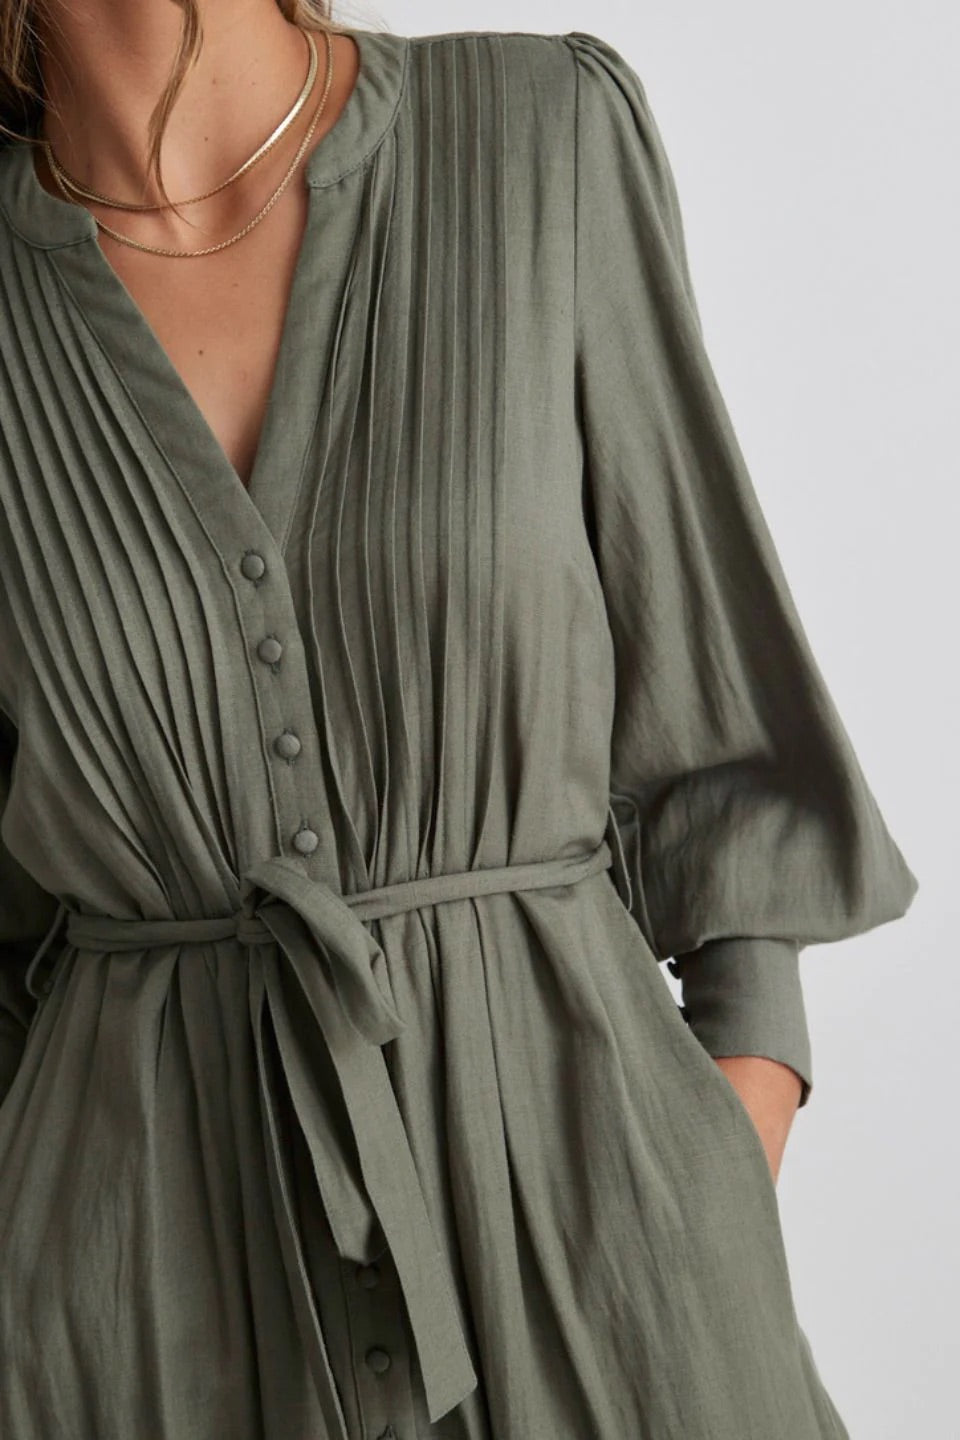 【Louren】pin tuck sleeve dress / khaki